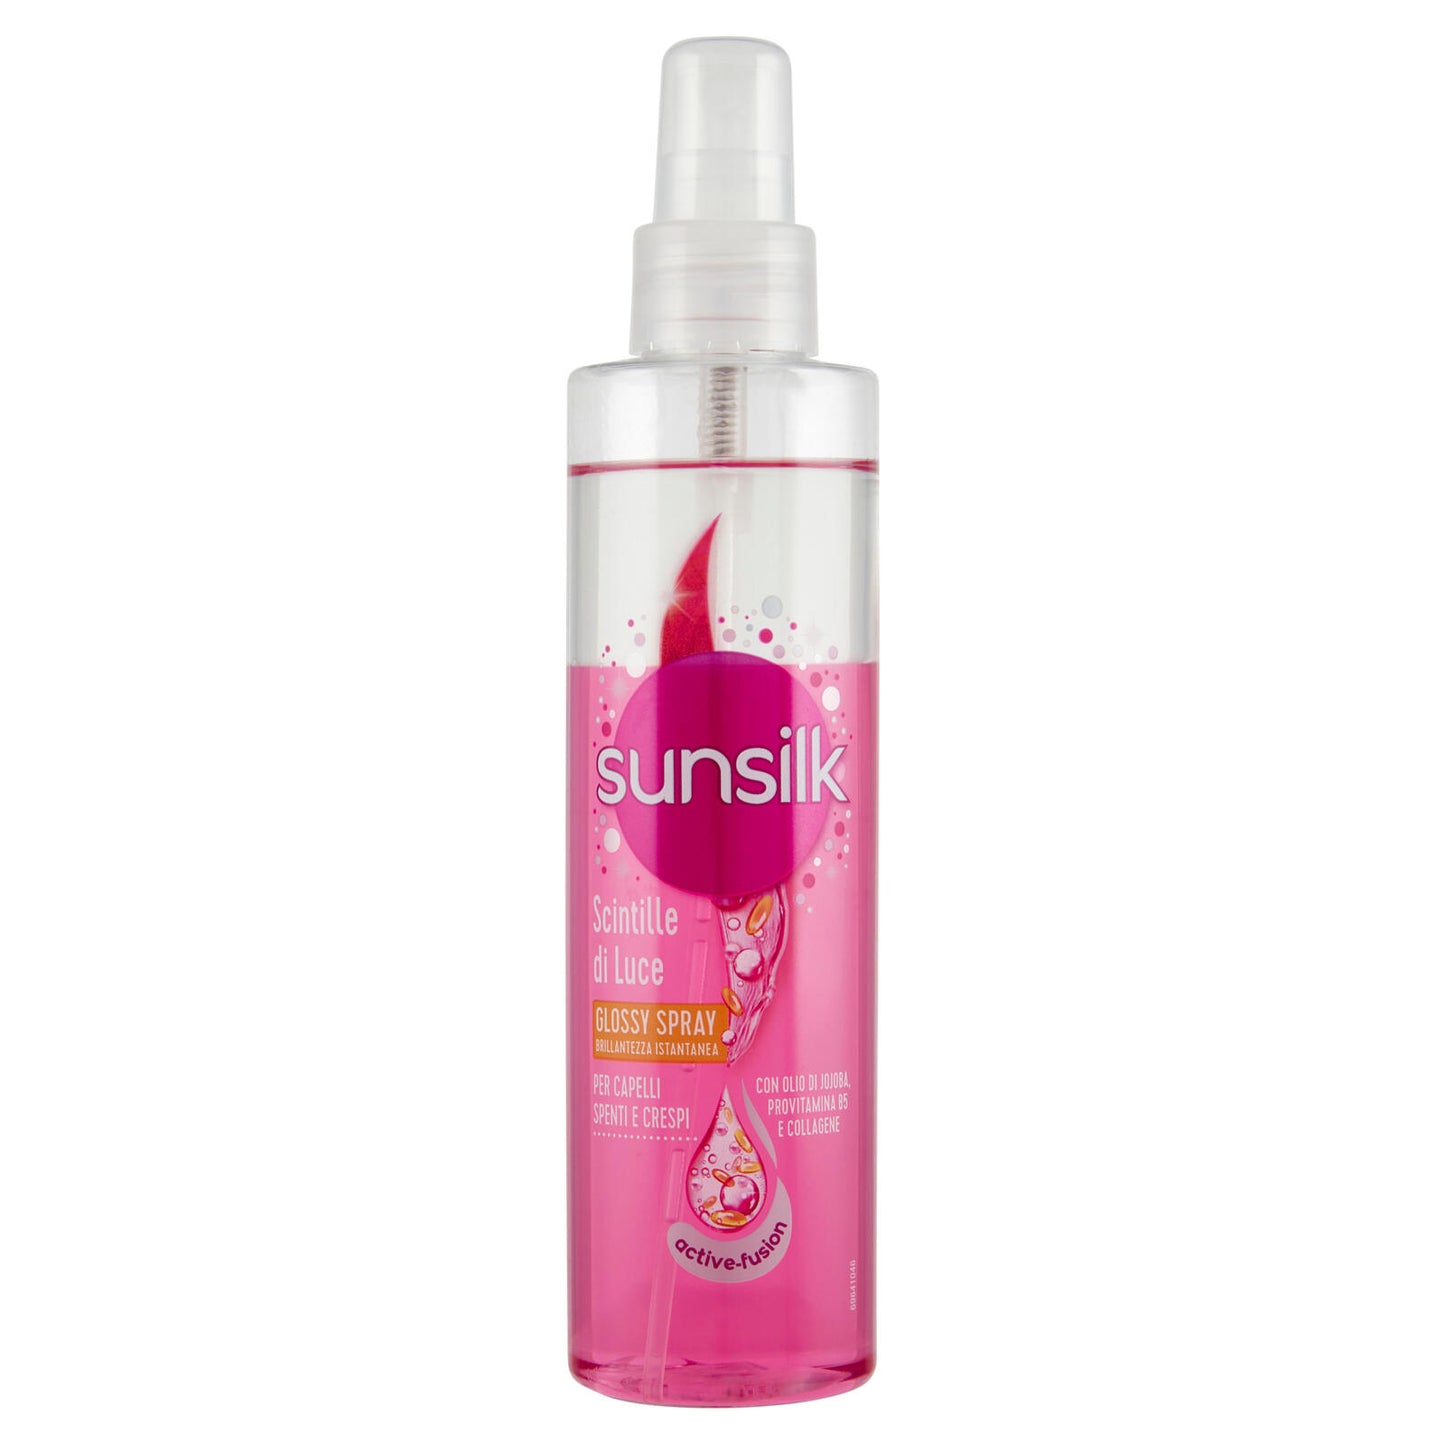 sunsilk Scintille di Luce Glossy Spray per Capelli Spenti e Crespi 200 ml